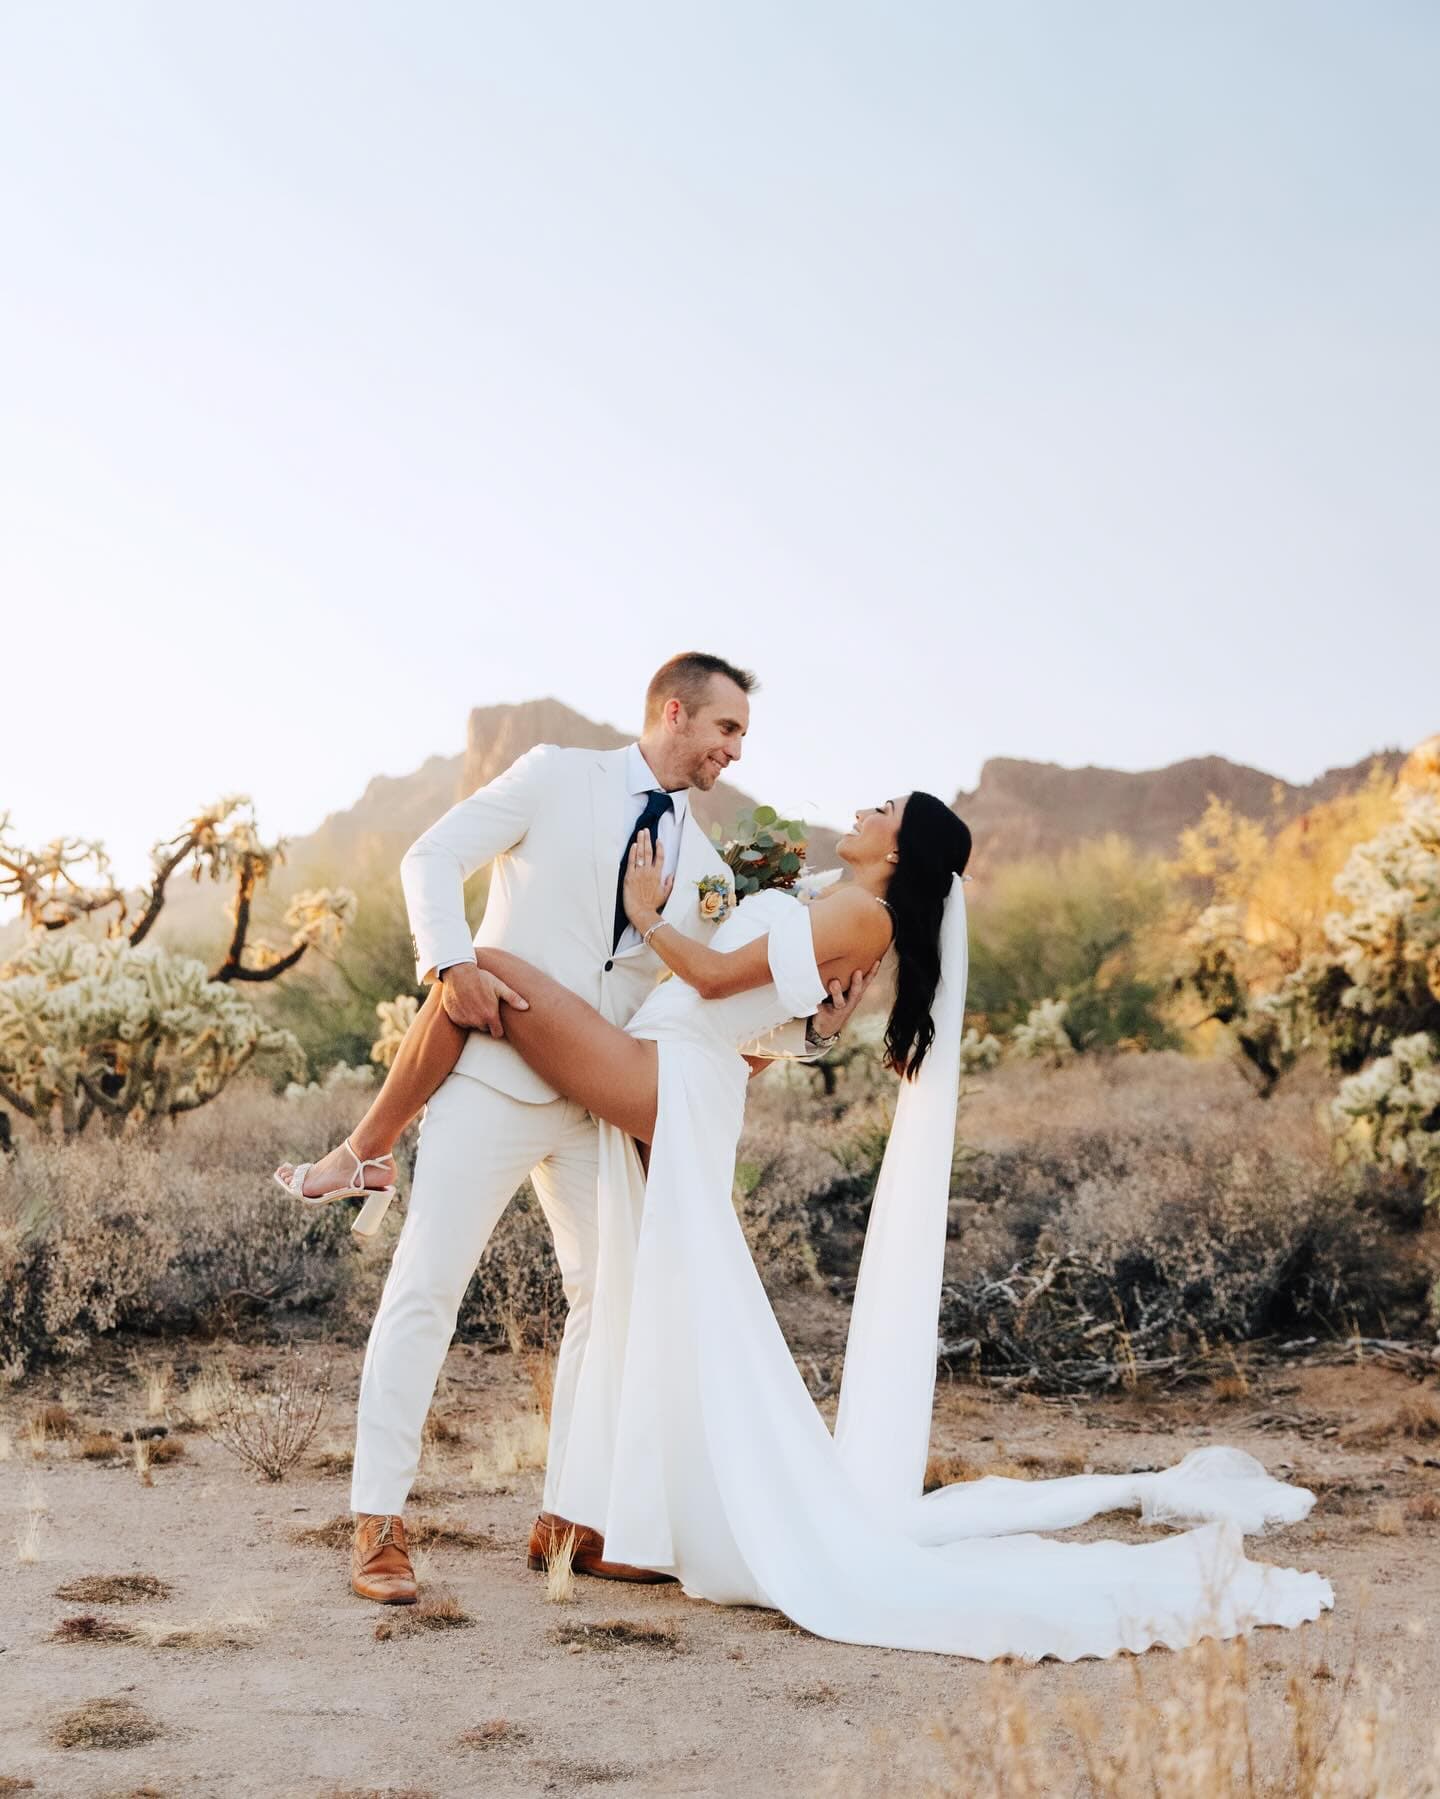 Desert Weddings: An Unforgettable Experience